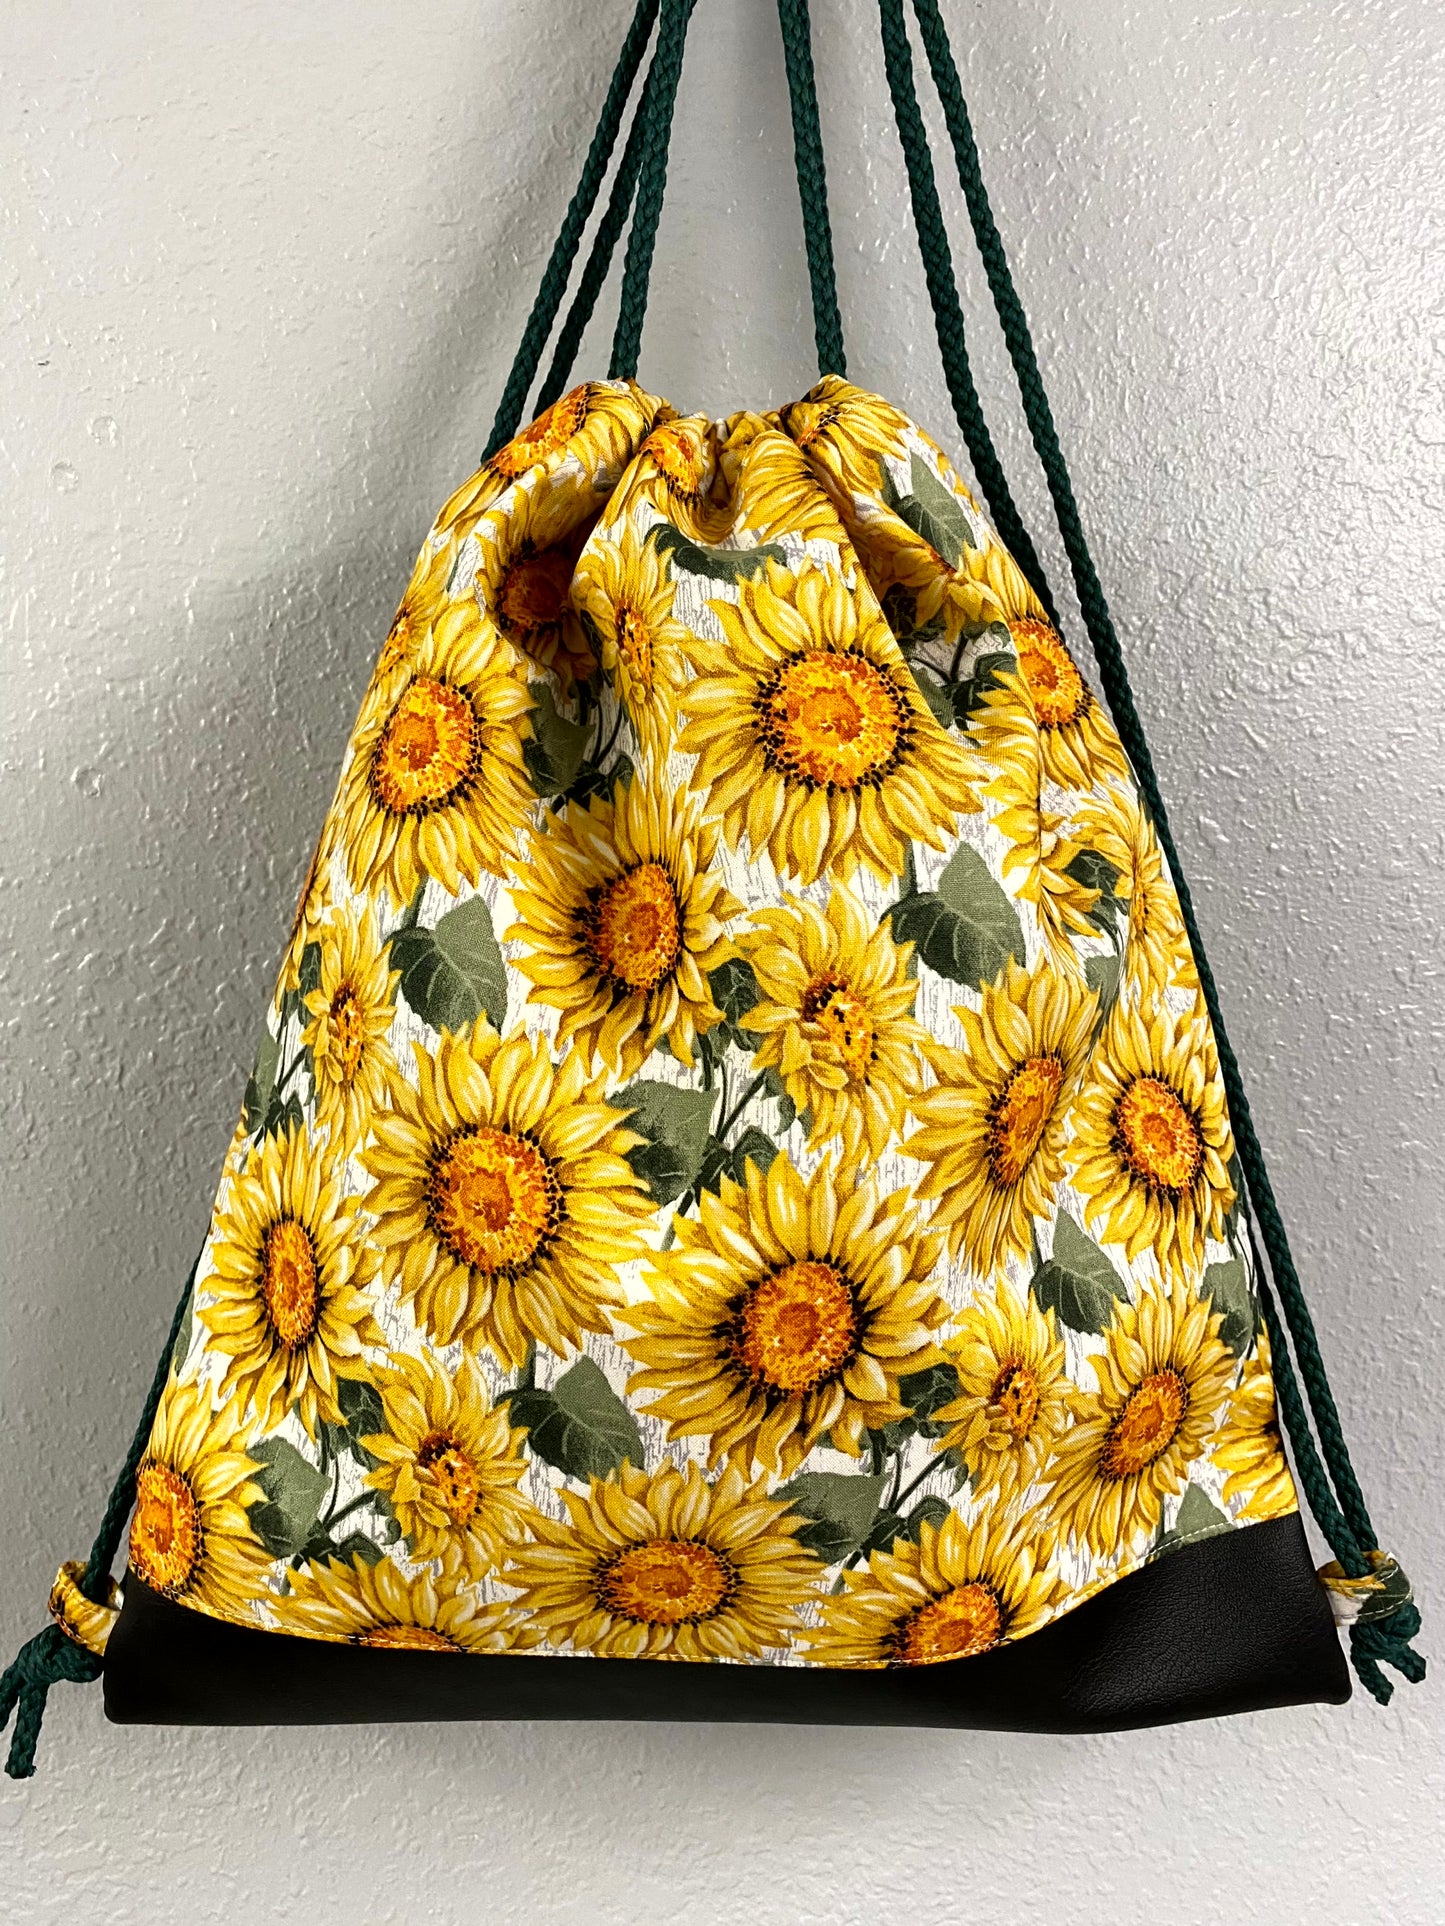 Sunflower Drawstring Bag - Handmade Drawstring Bag – Drawstring Backpack - On the Go Bag - Toy Sack - Flower - Floral